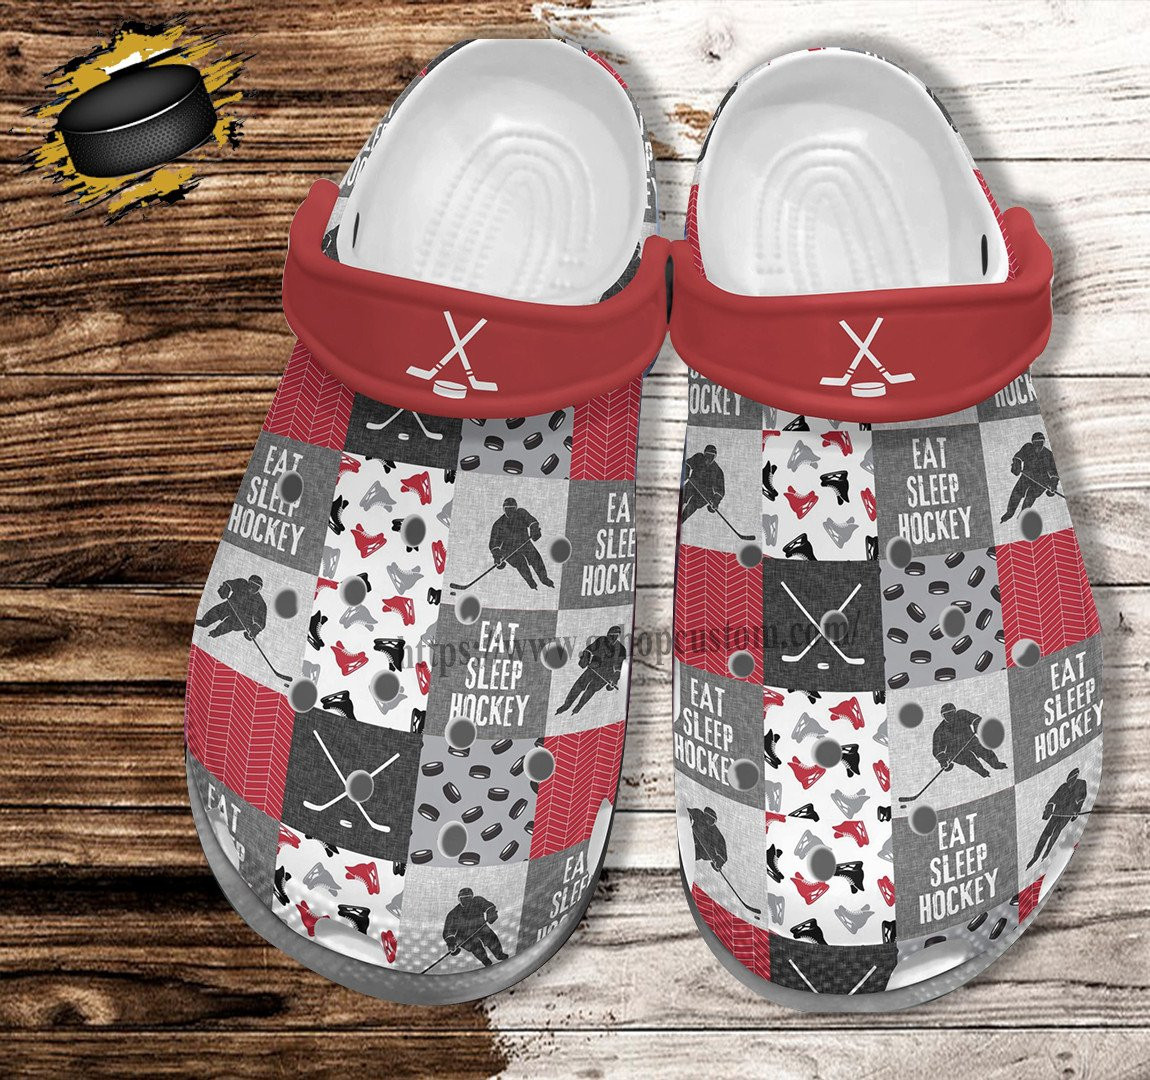 Hockey Eat Sleep Croc Shoes Gift Men Women- Hockey Sticker Shoes Croc Clogs